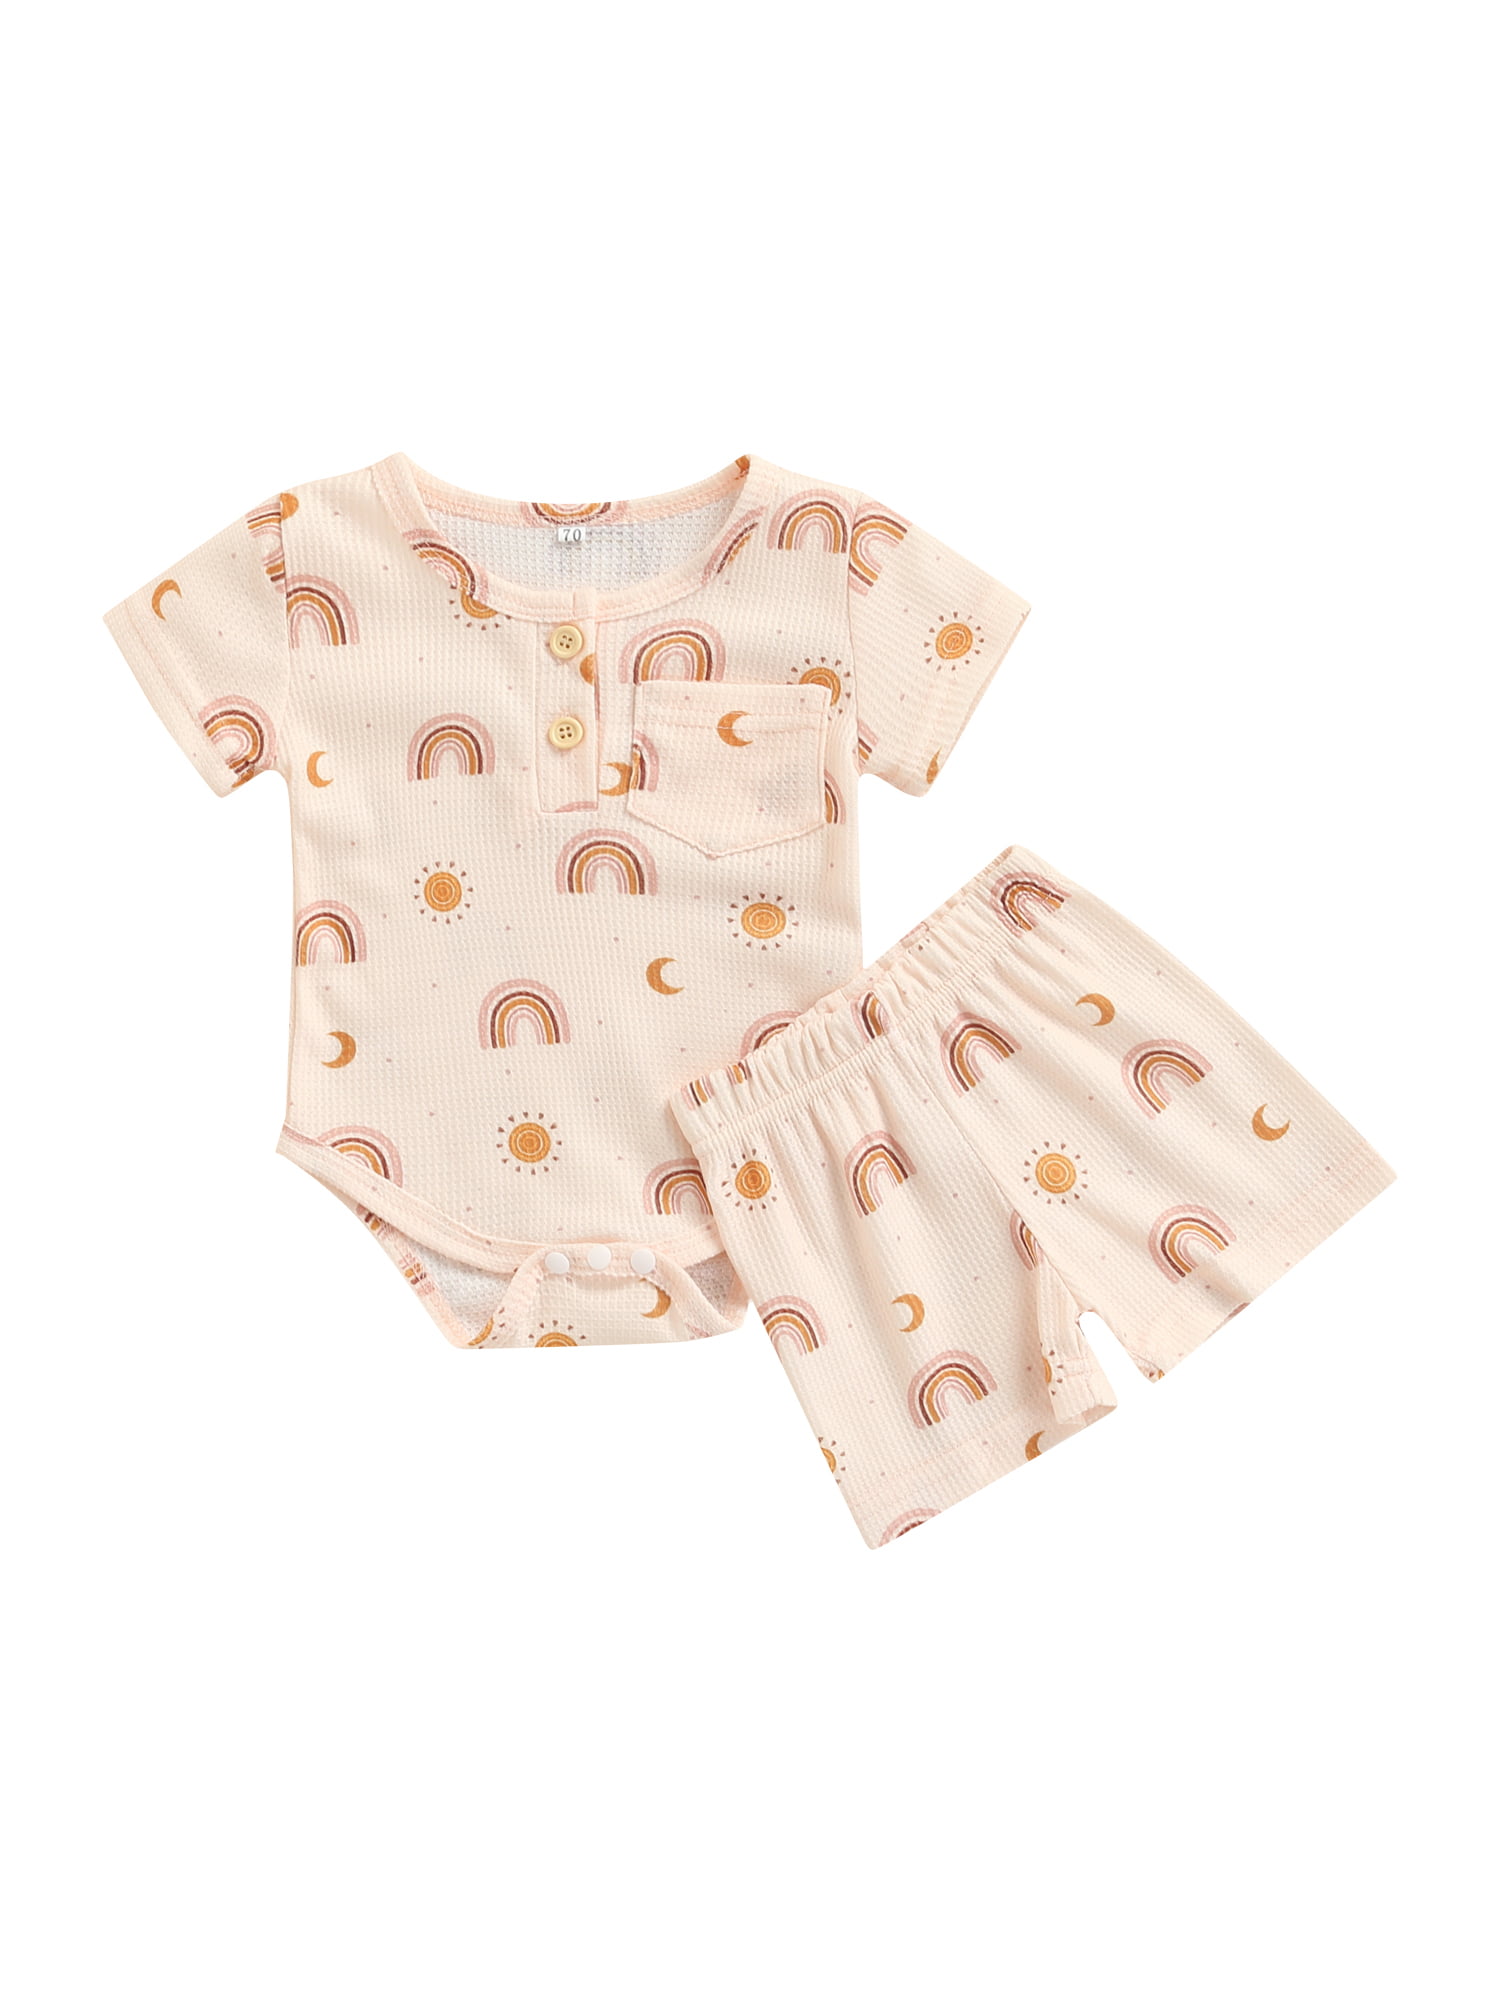 Baby Cotton Romper Boy Girl Summer Jumpsuit 3-Pack Short Sleeve Printed Pyjamas Bodysuit Outfit 3-24 Months 